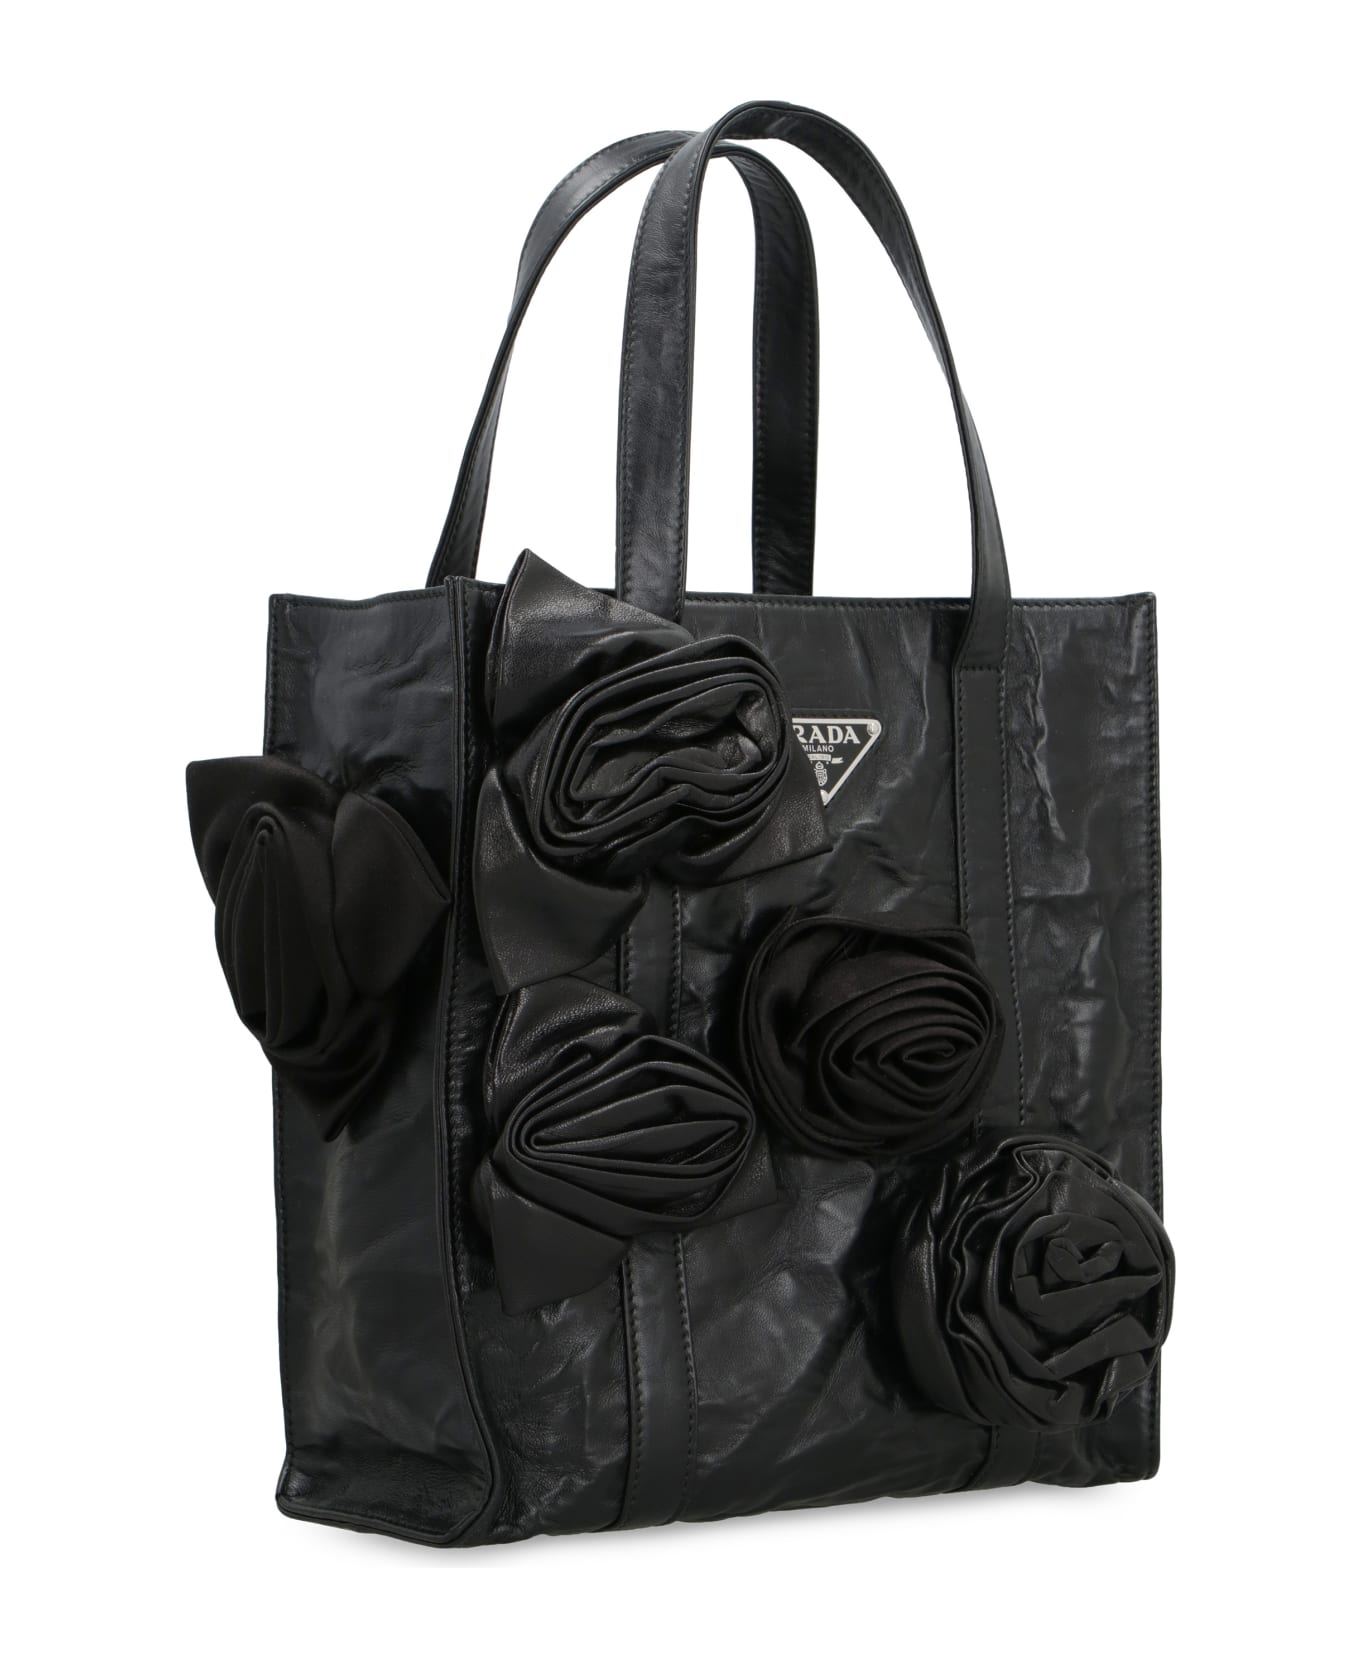 Prada Leather Handbag - black